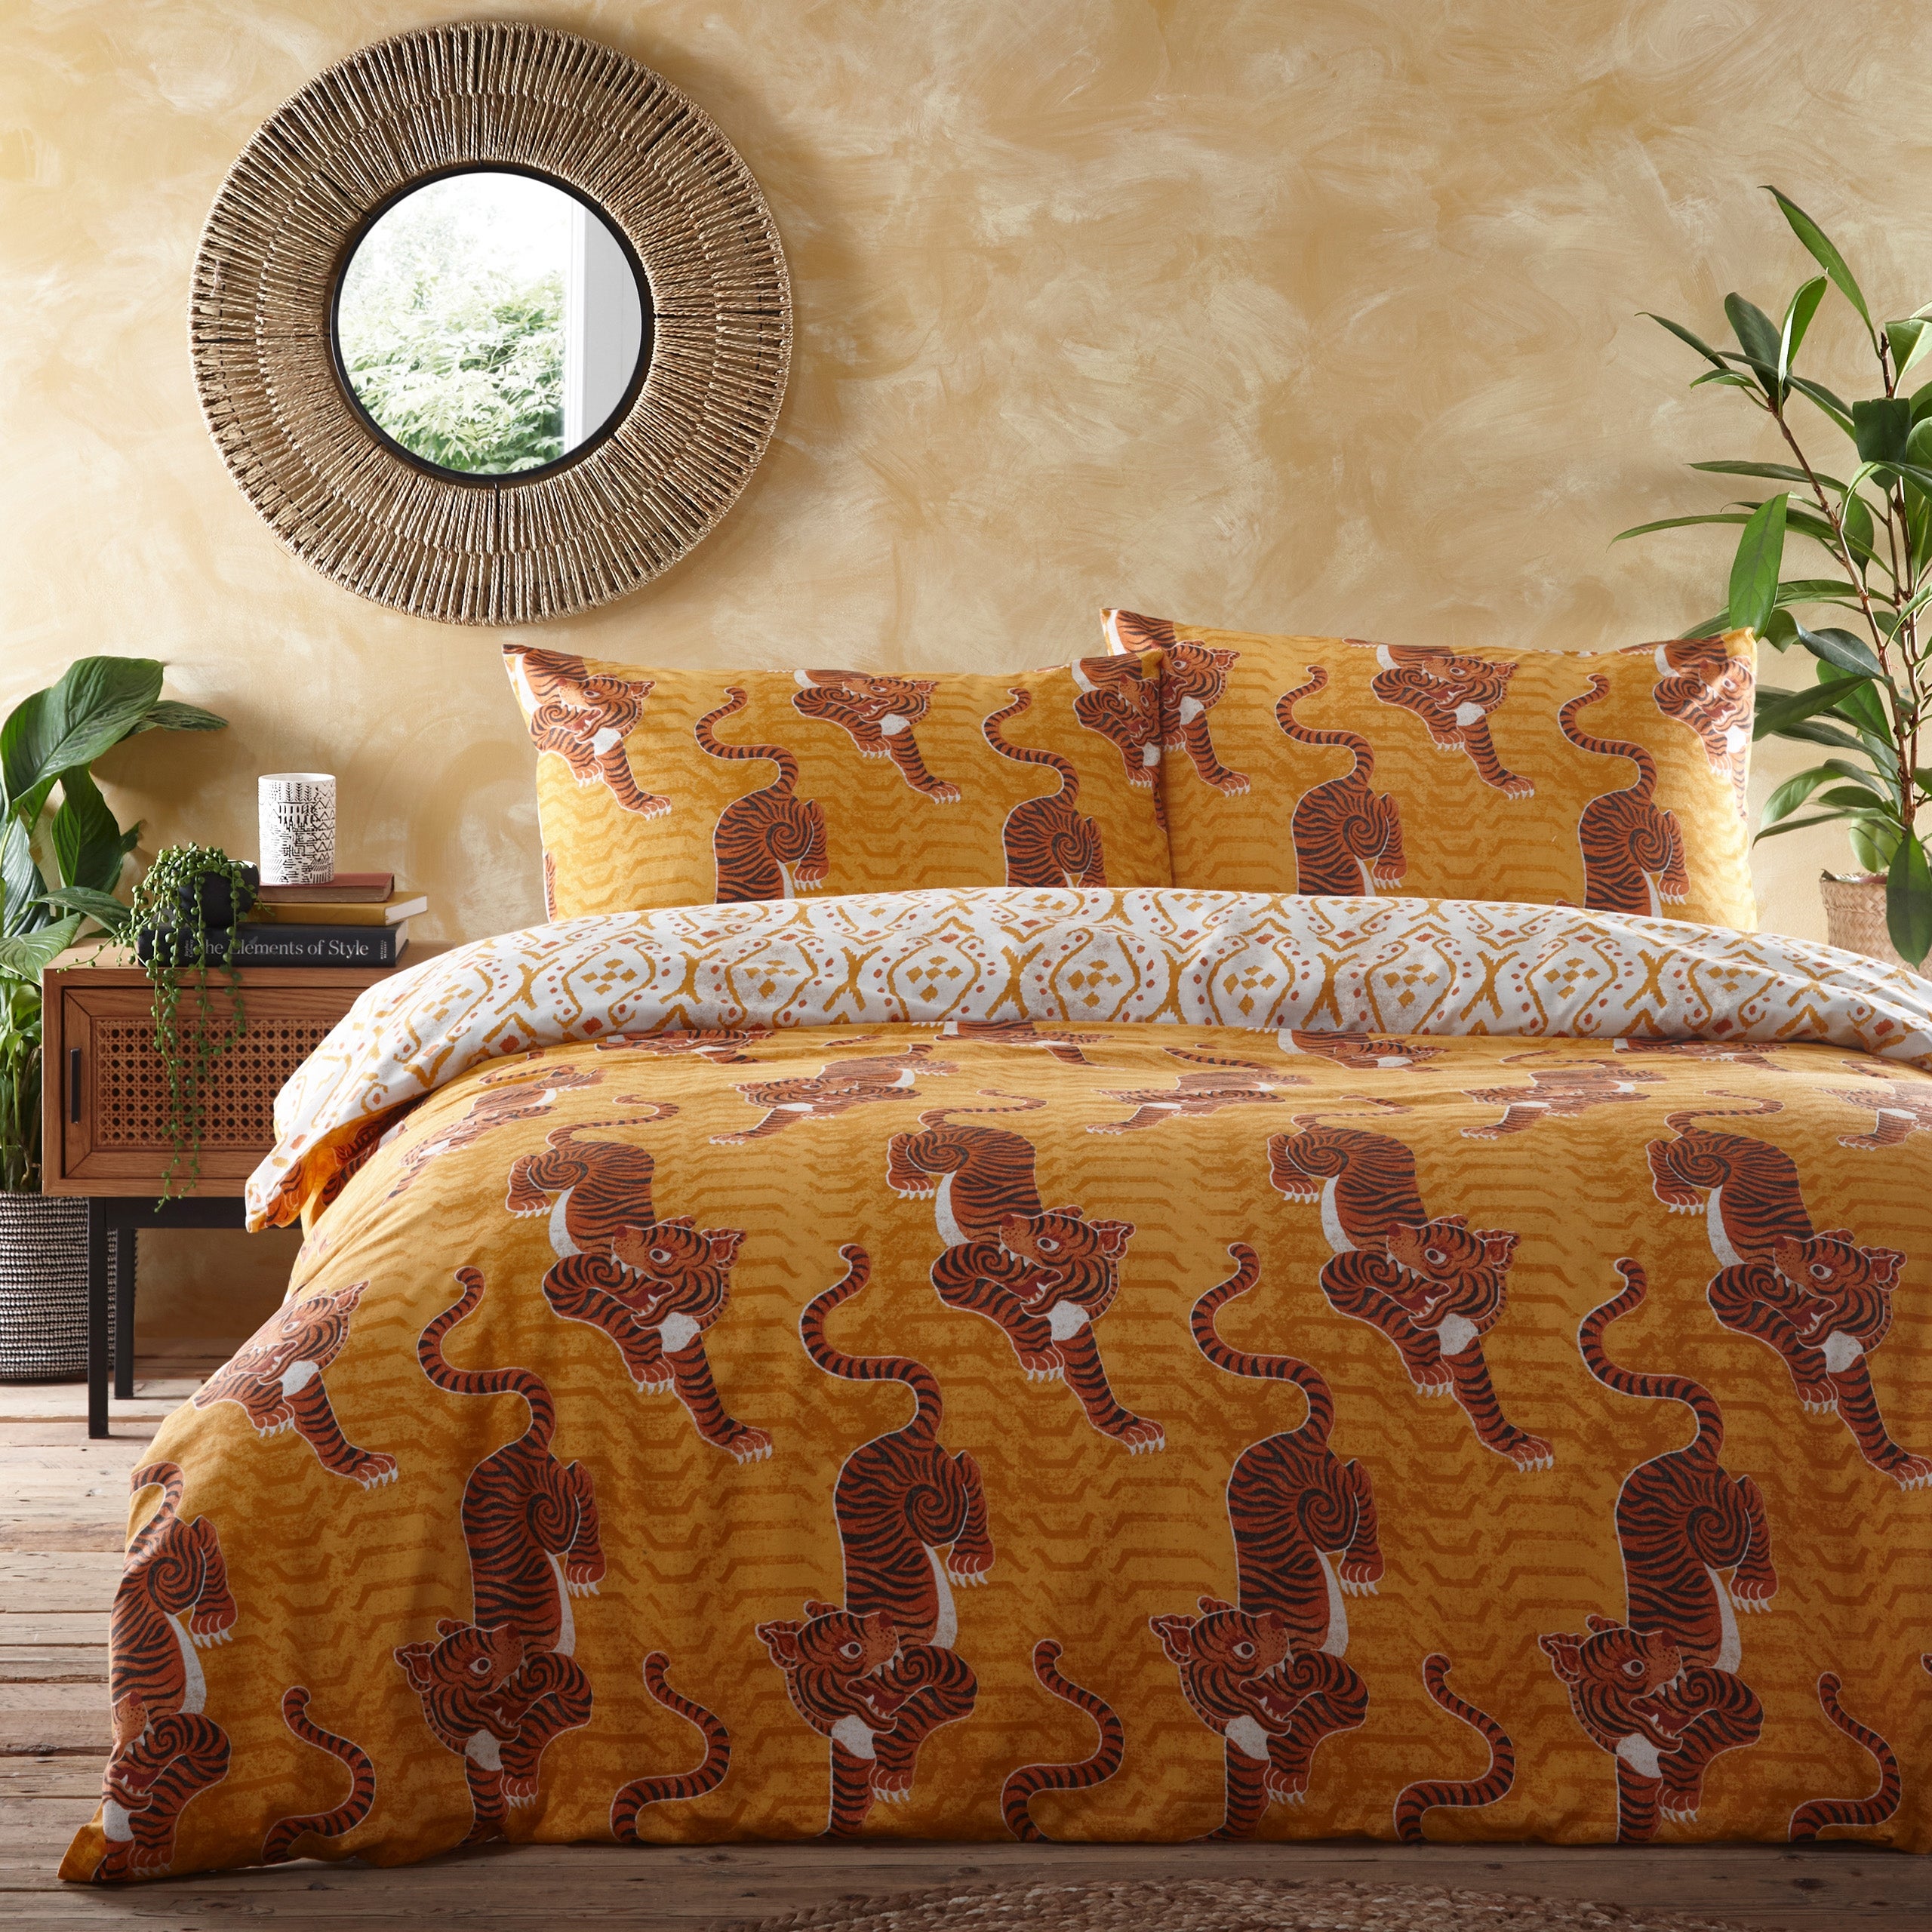 Furn Tibetan Tiger Mustard Duvet Cover And Pillowcase Set Yellow